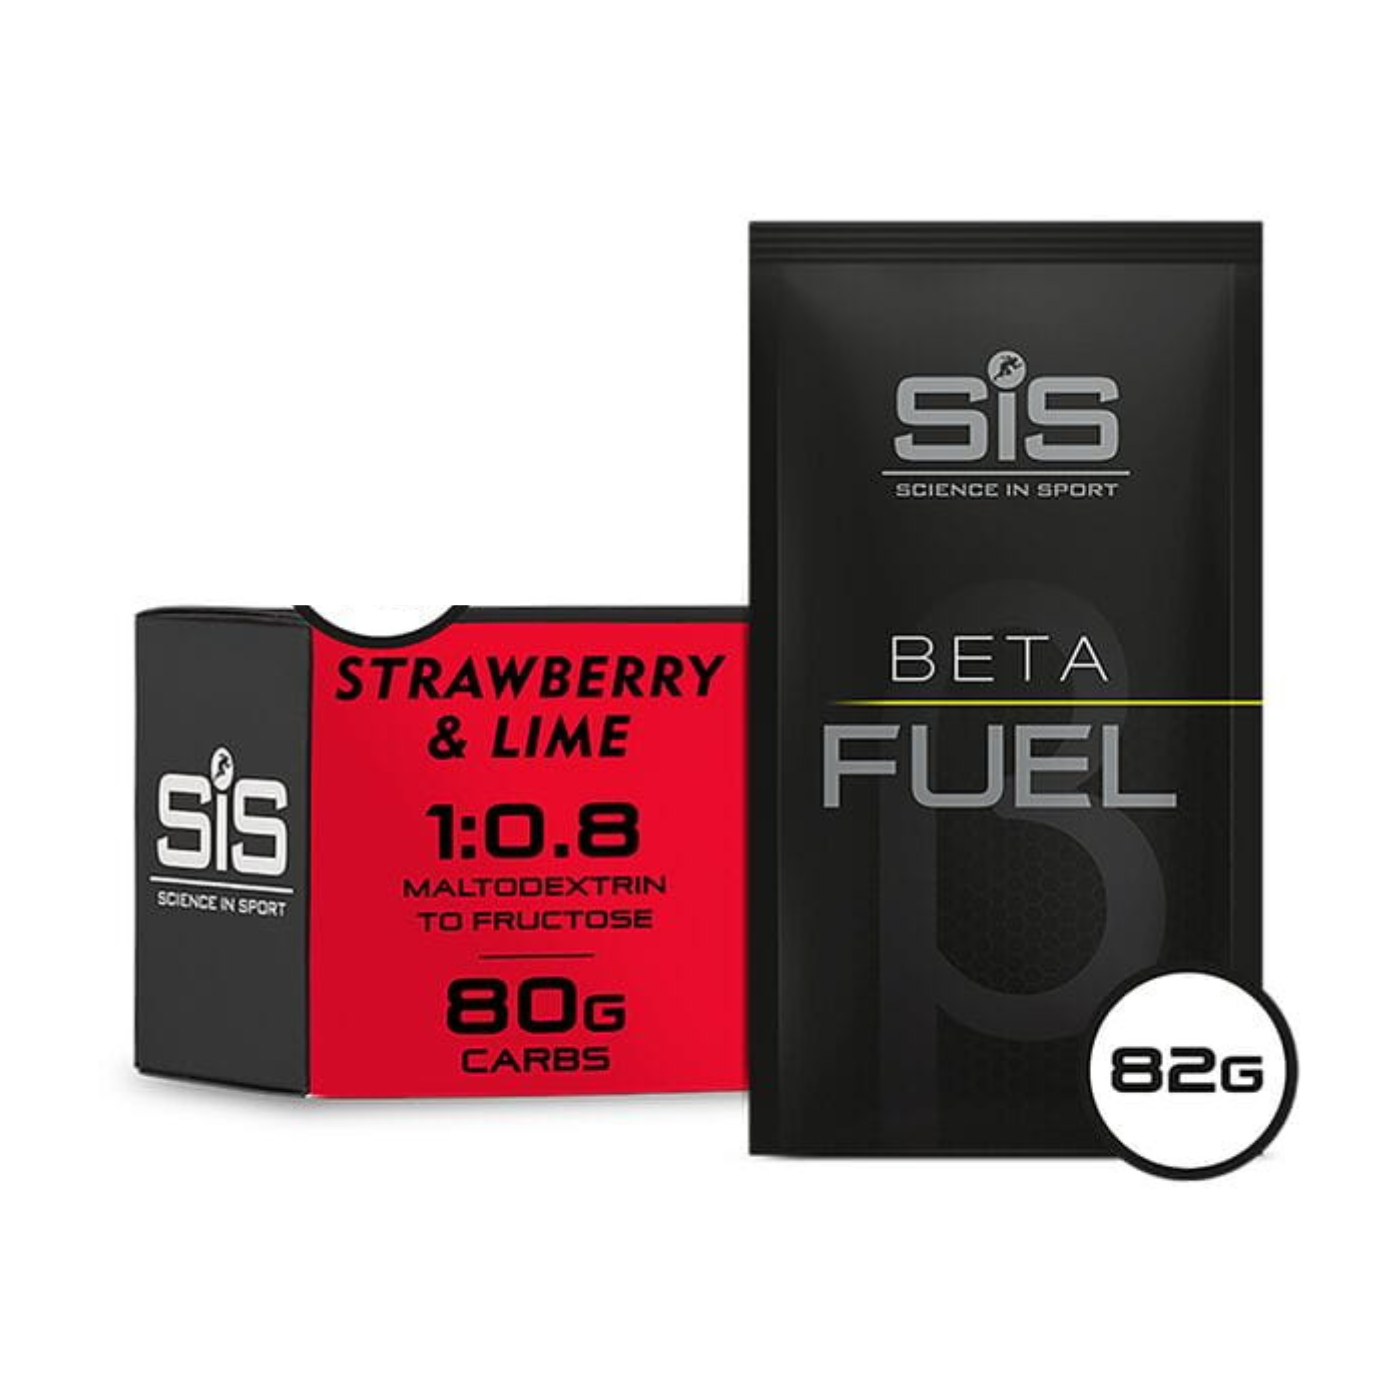 SIS BETA Fuel Energy Drink Powder